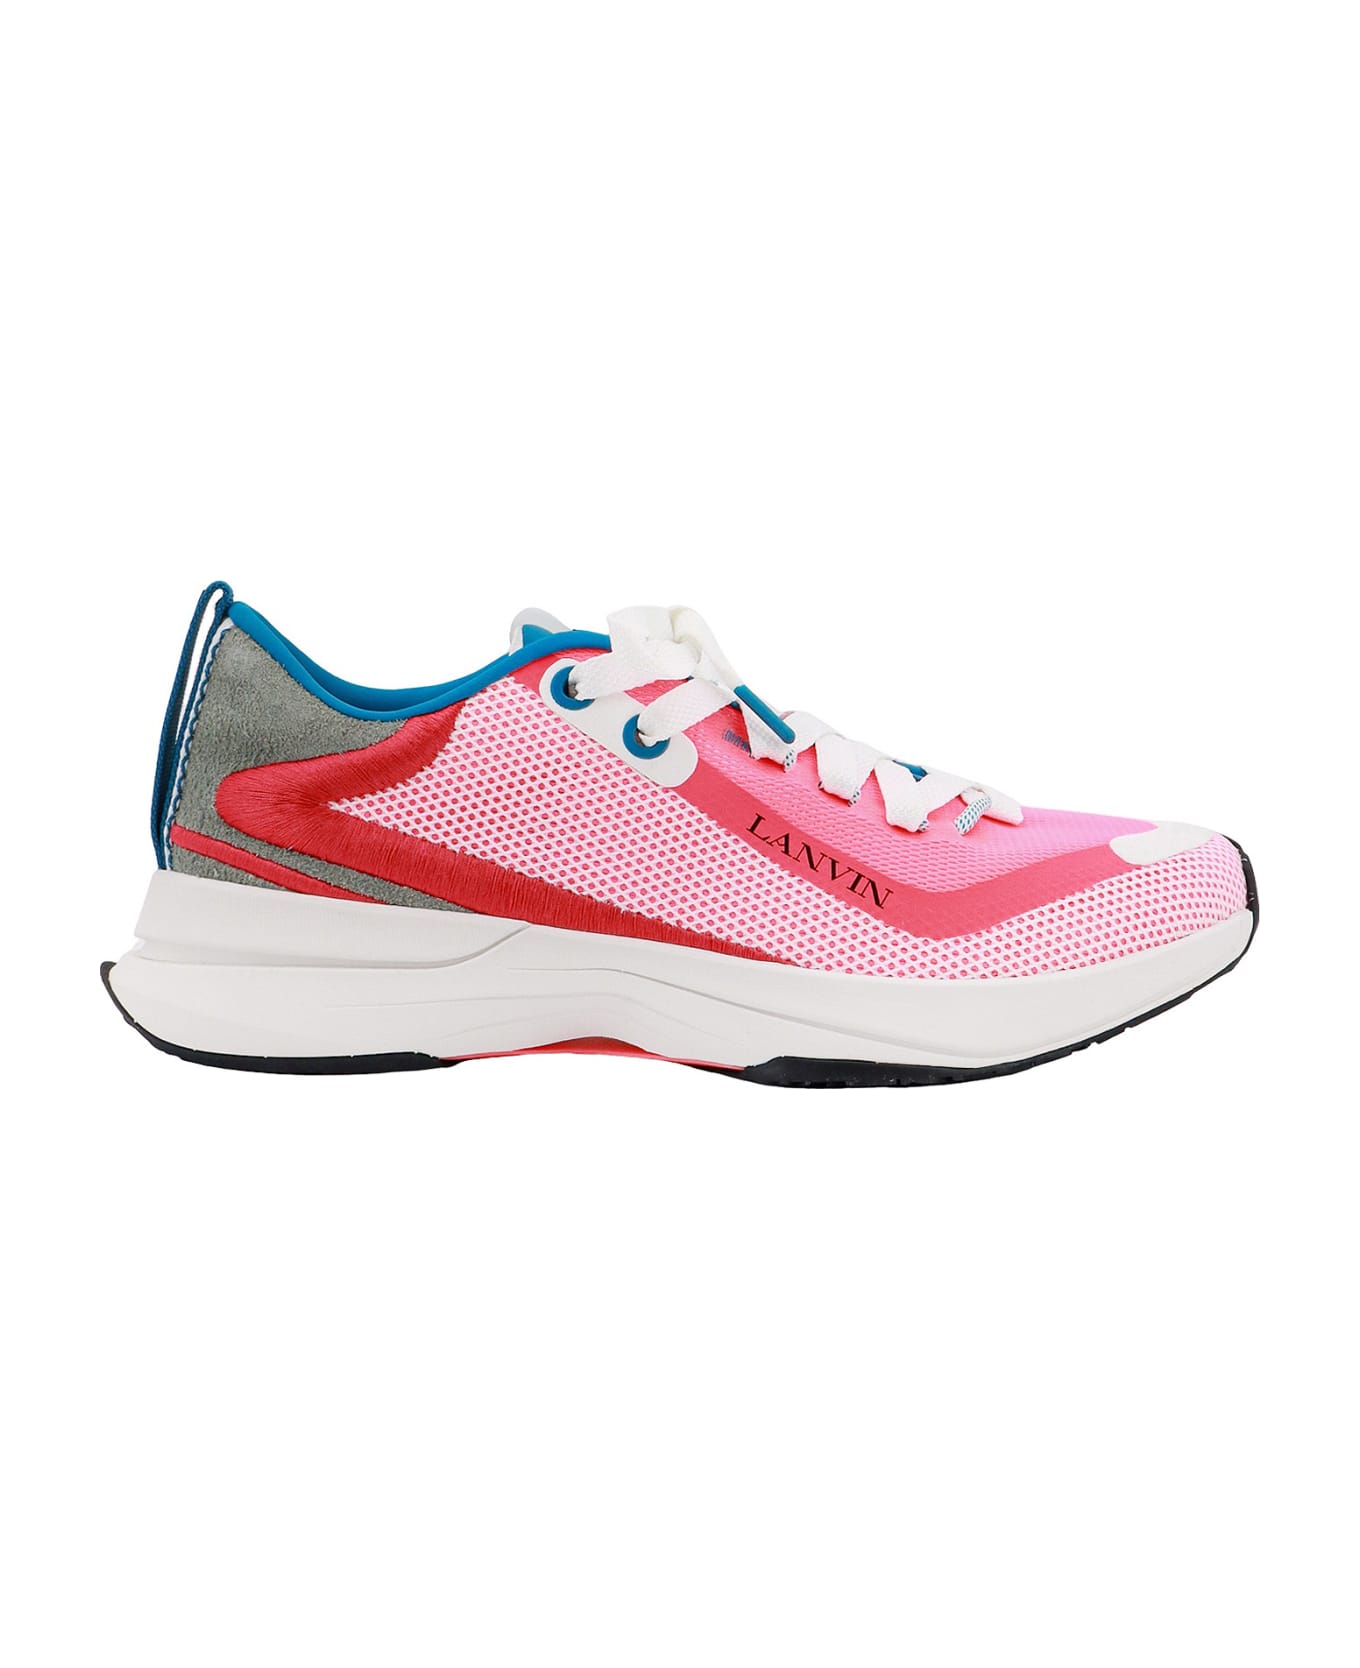 Lanvin Runner Sneakers - Pink